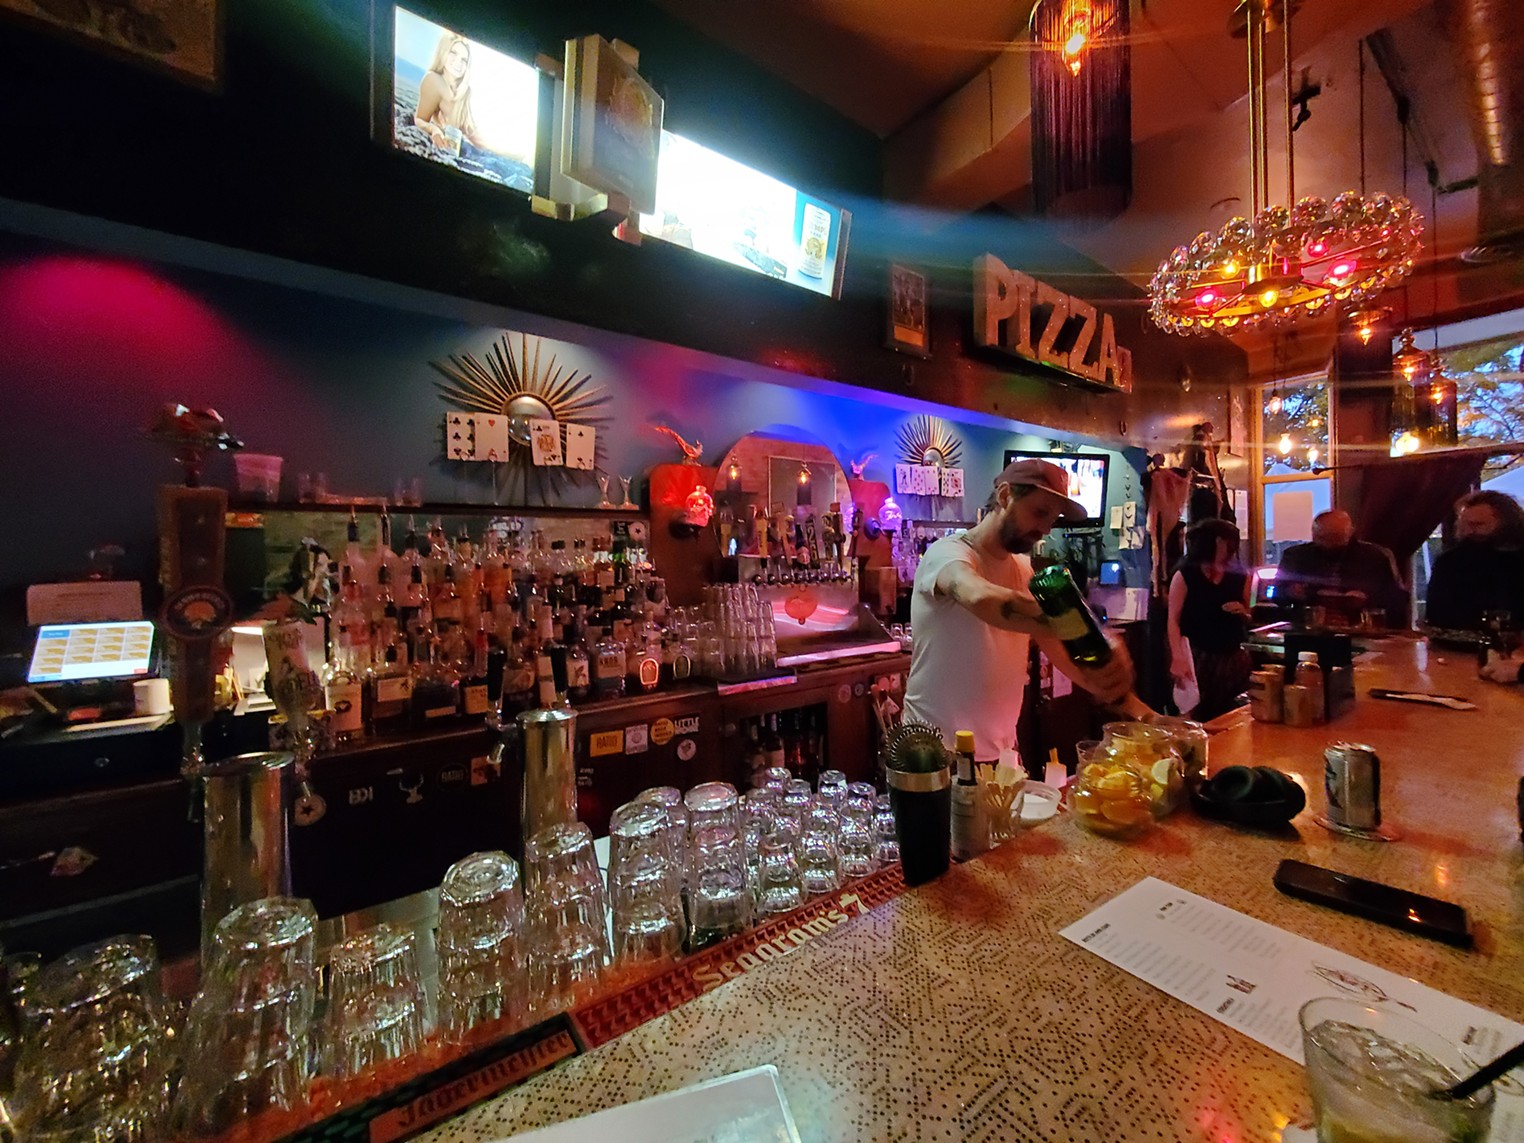 Roxy's Restaurant & Bar – The Horseshoe Casino - The Mountain-Ear